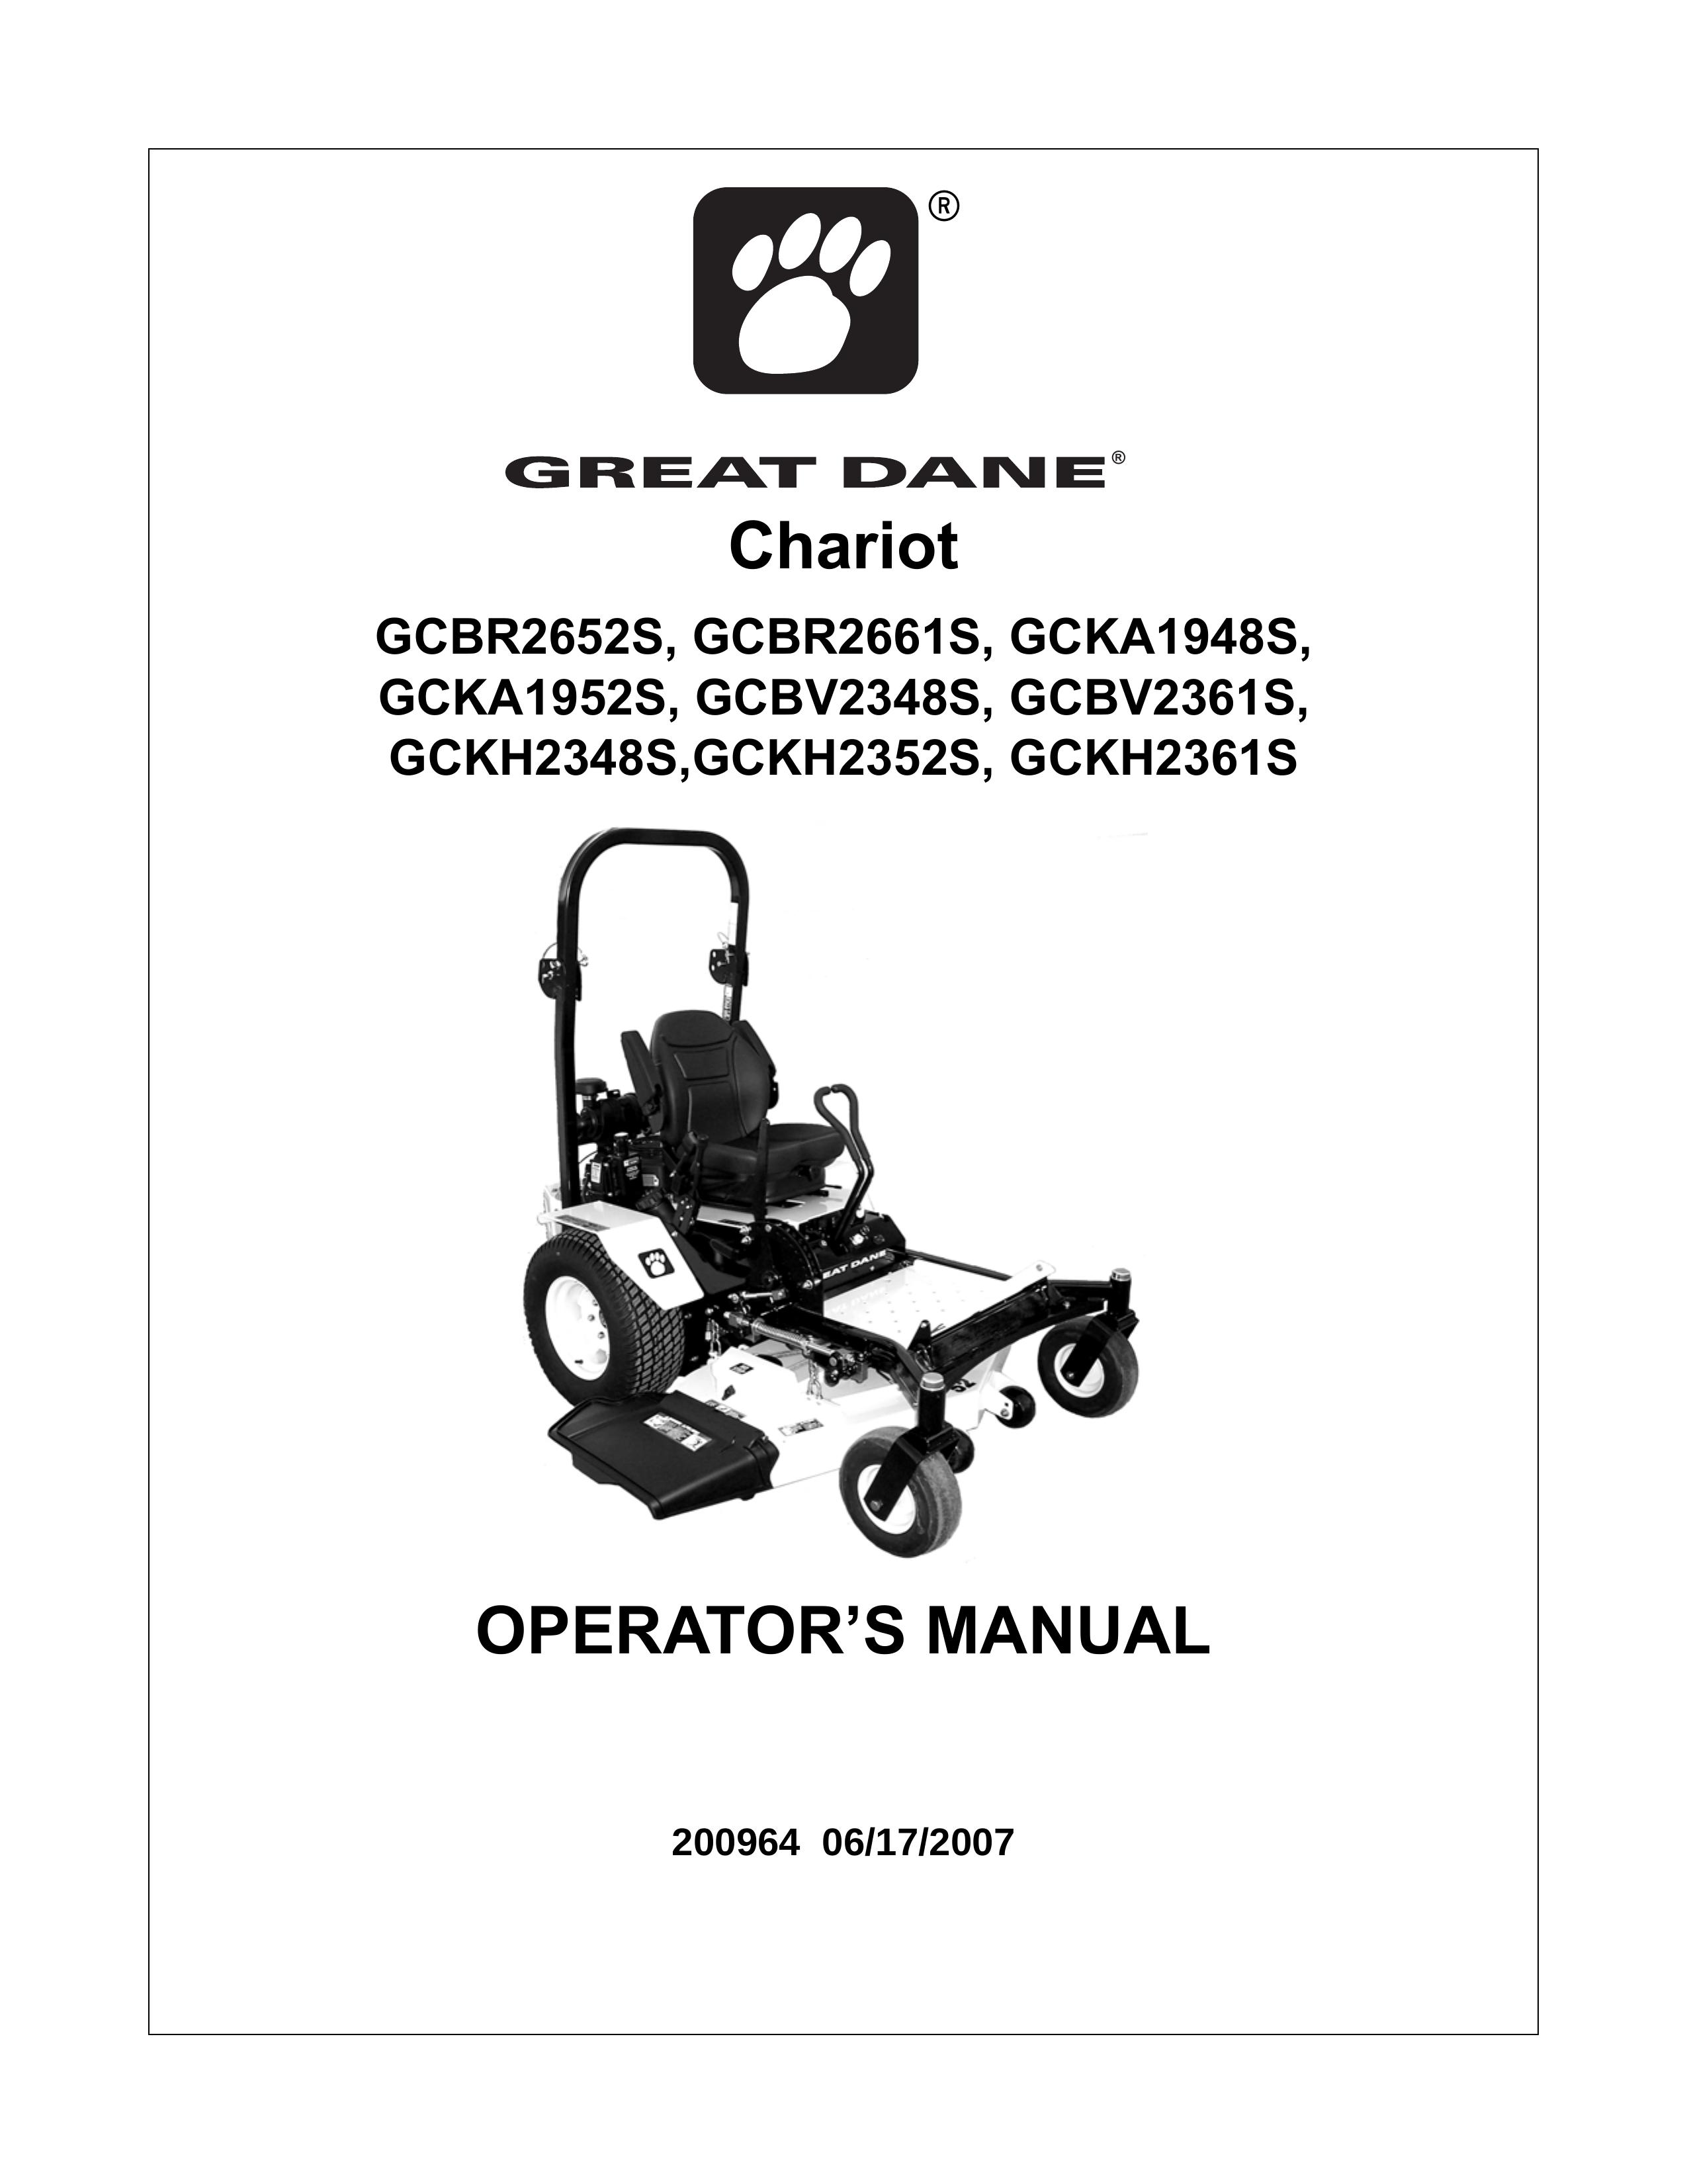 Great Dane GCBR2661S Lawn Mower User Manual